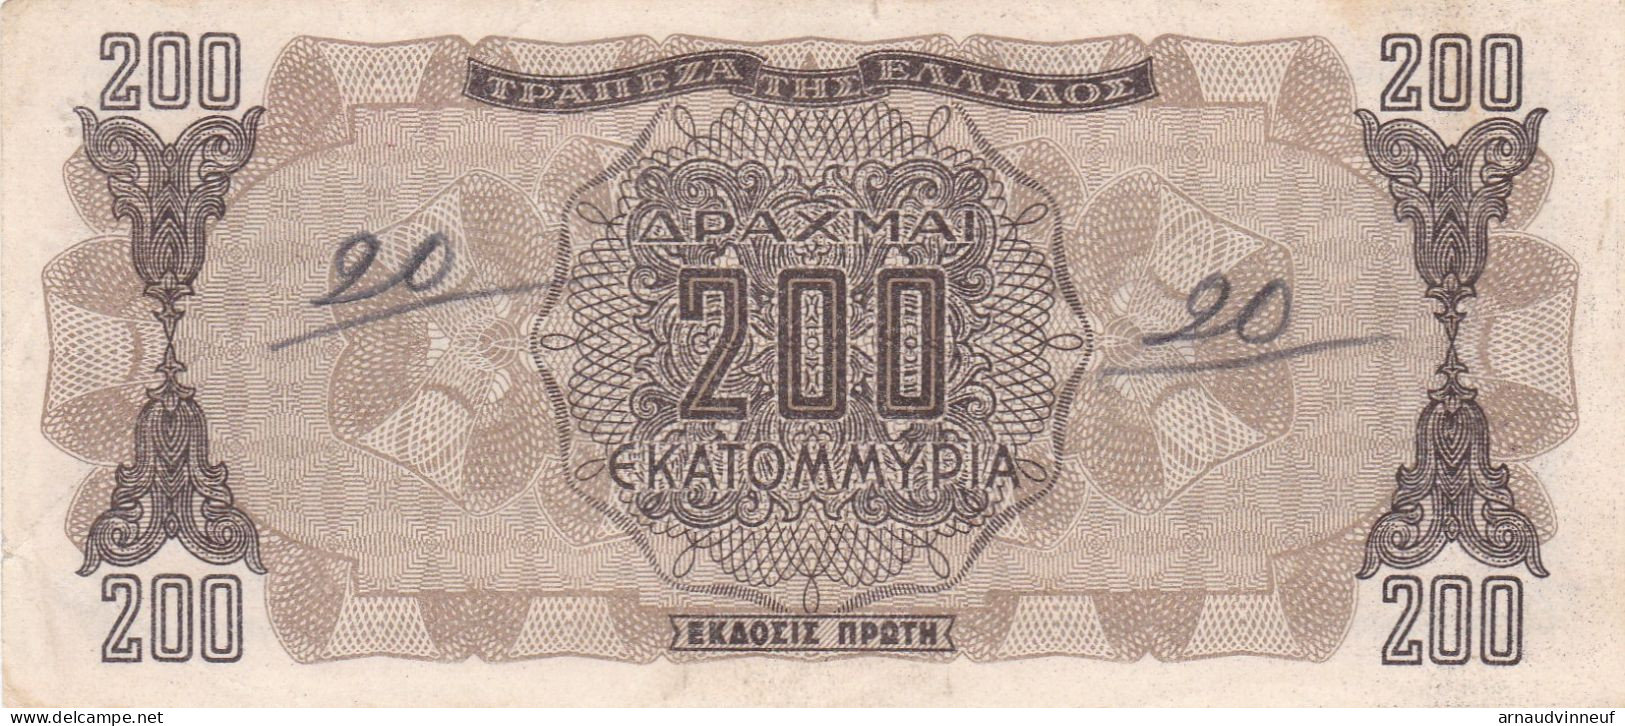 BILLET 200 EKATOMMYPIA - Grèce